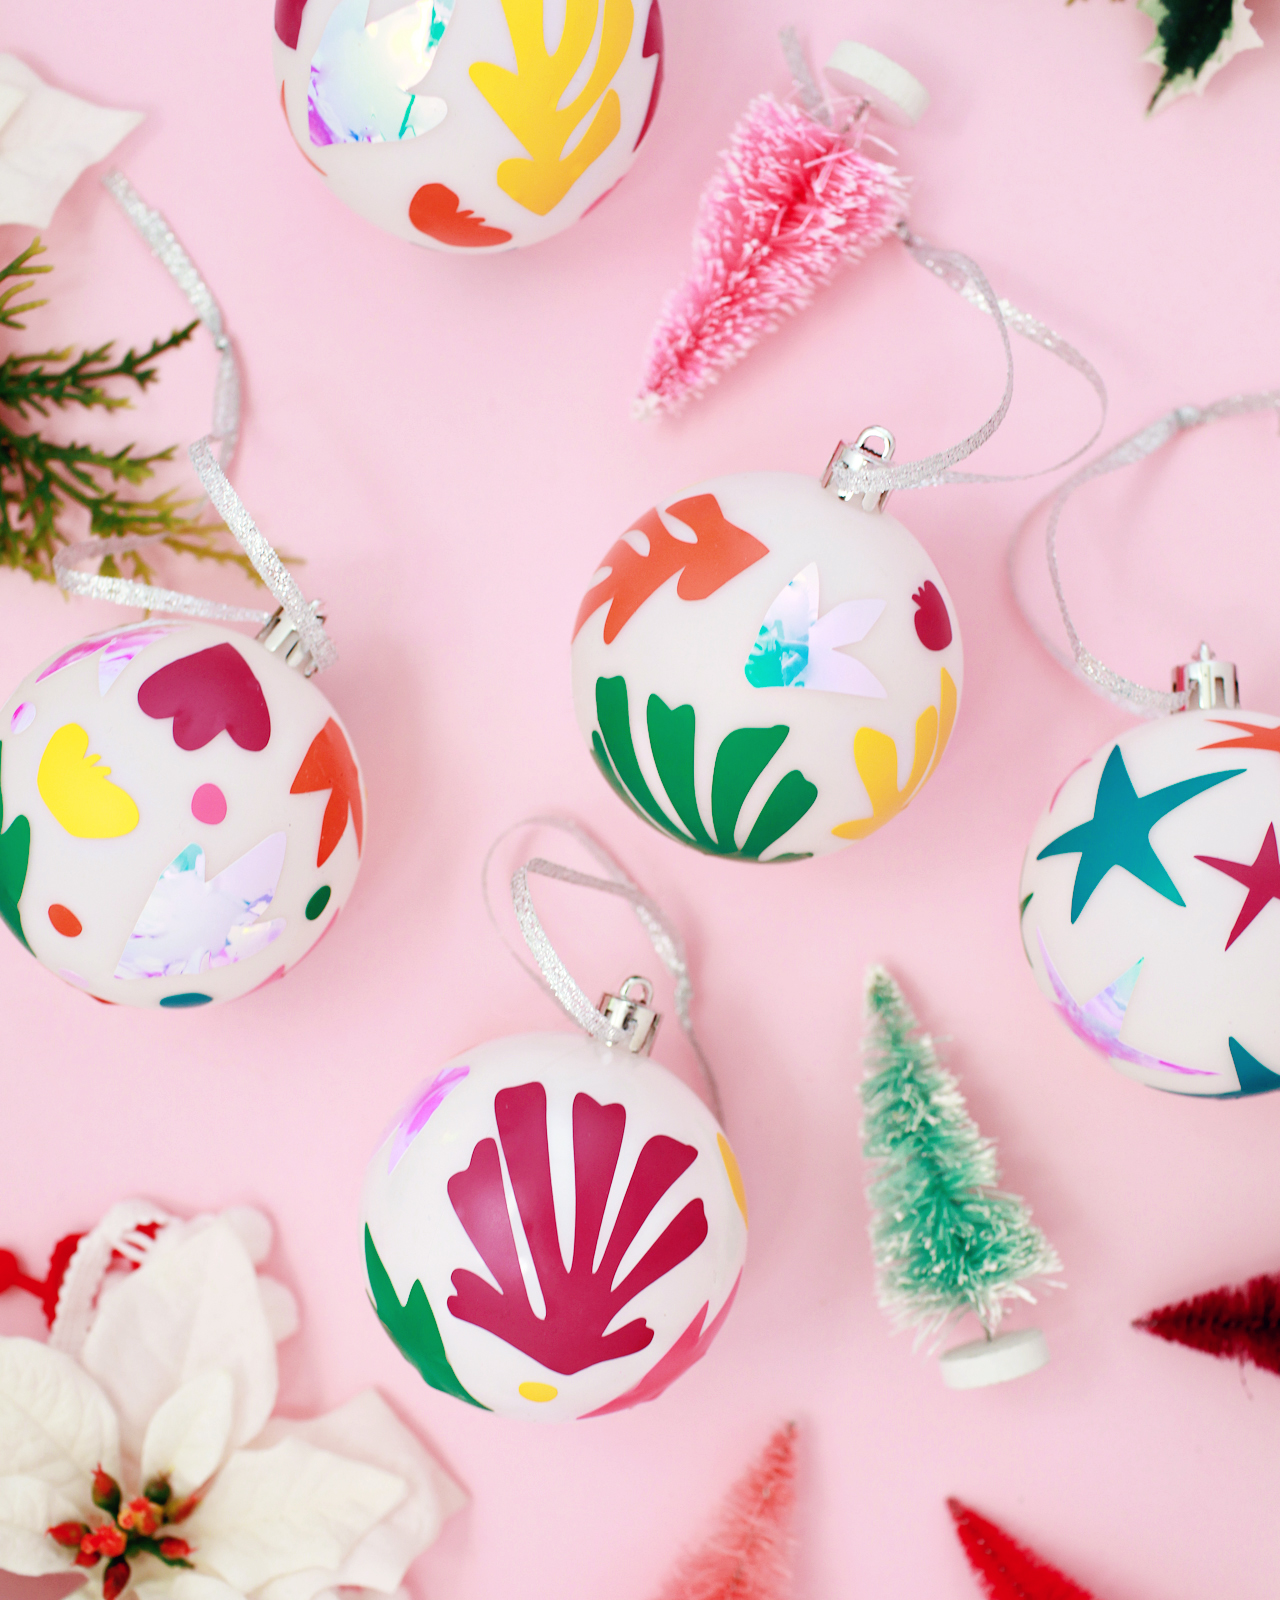 DIY Matisse-Inspired Ornaments